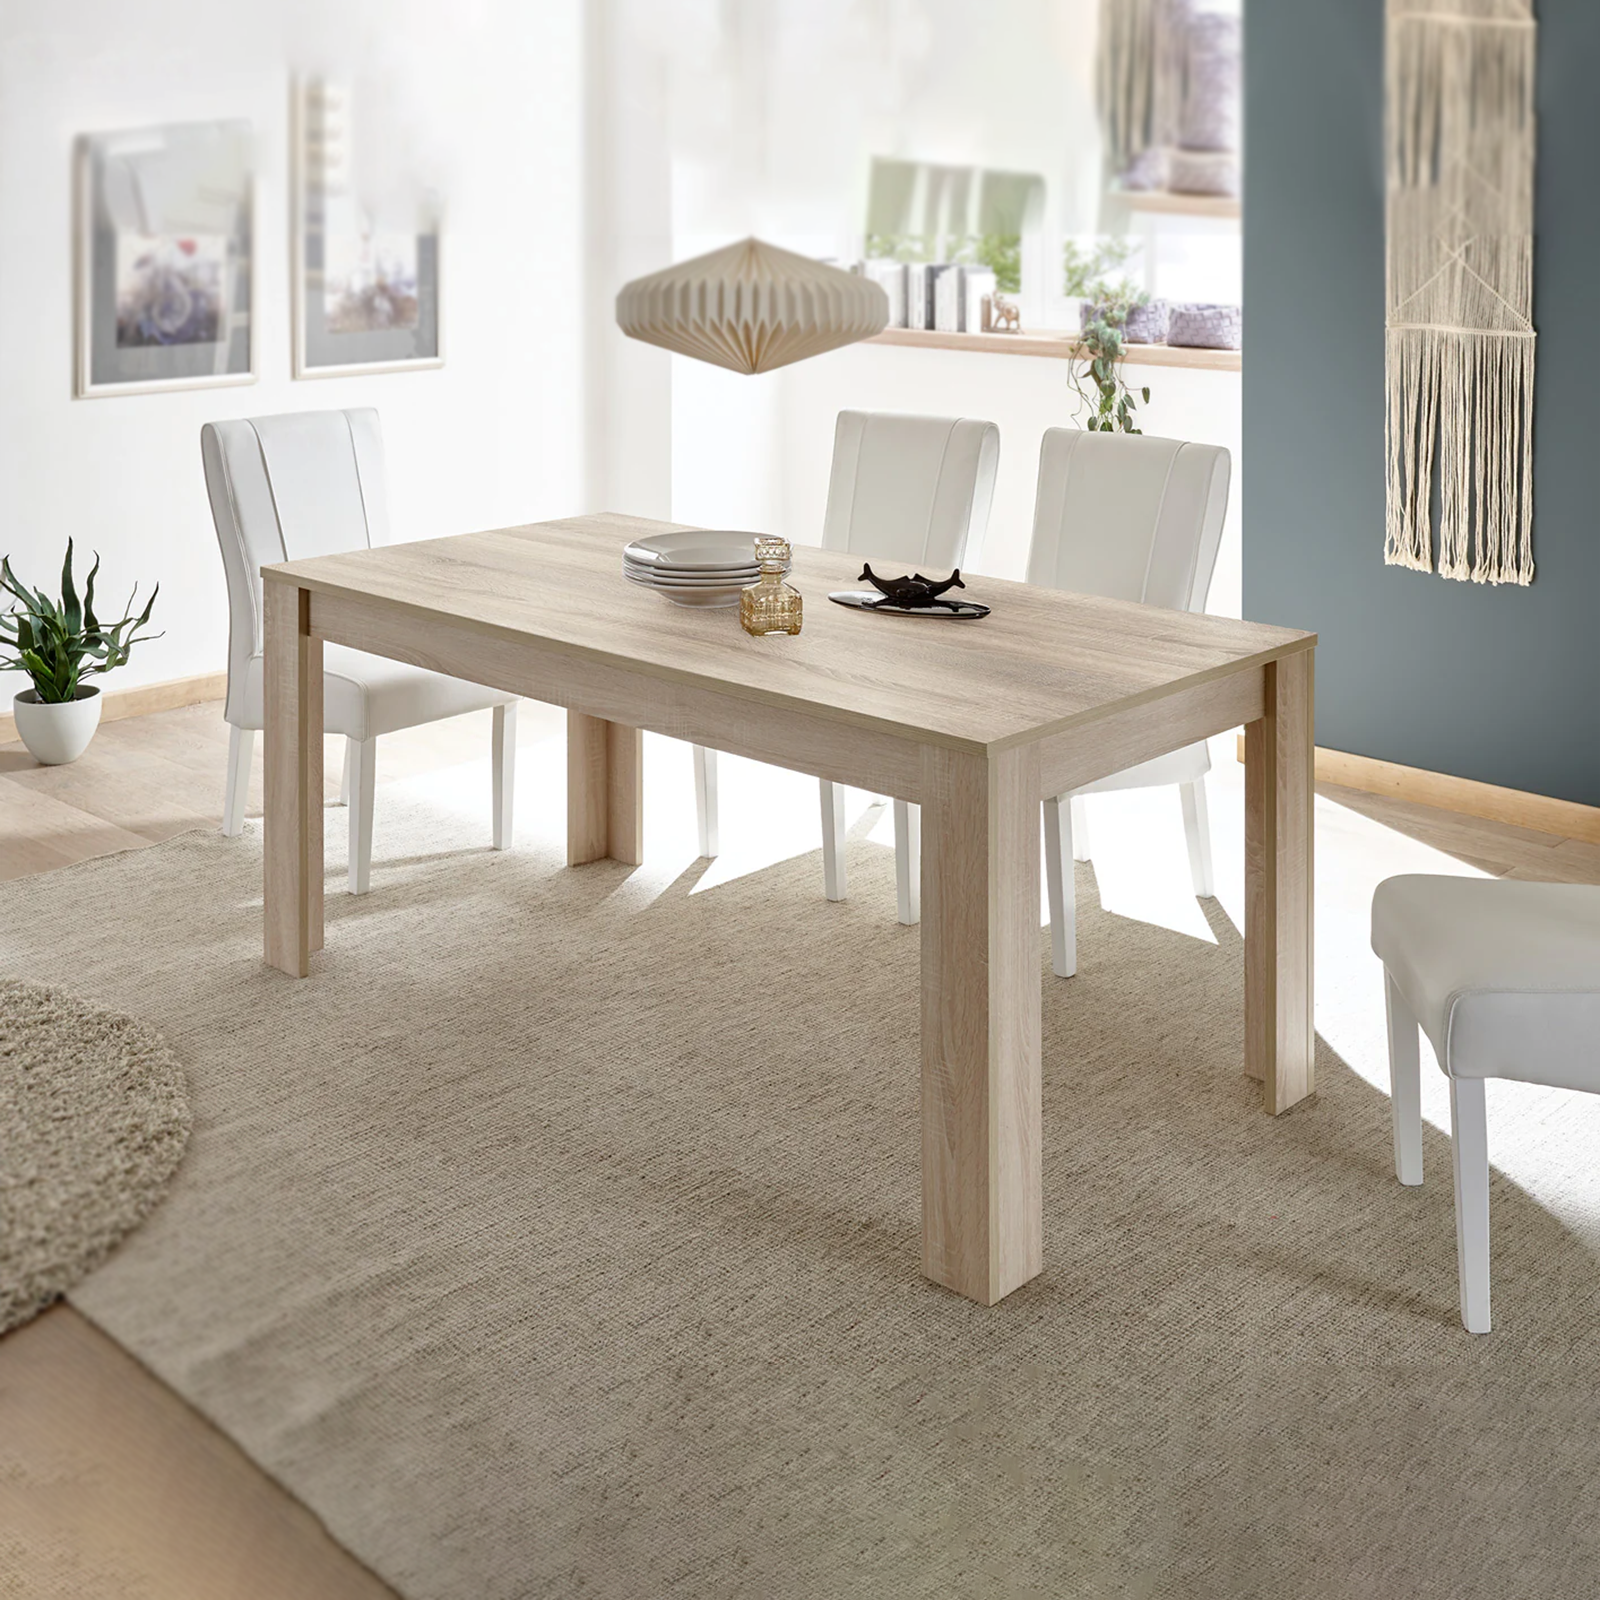 Table moderne "Firenze" en bois de chêne fixe 180x90 cm 79h